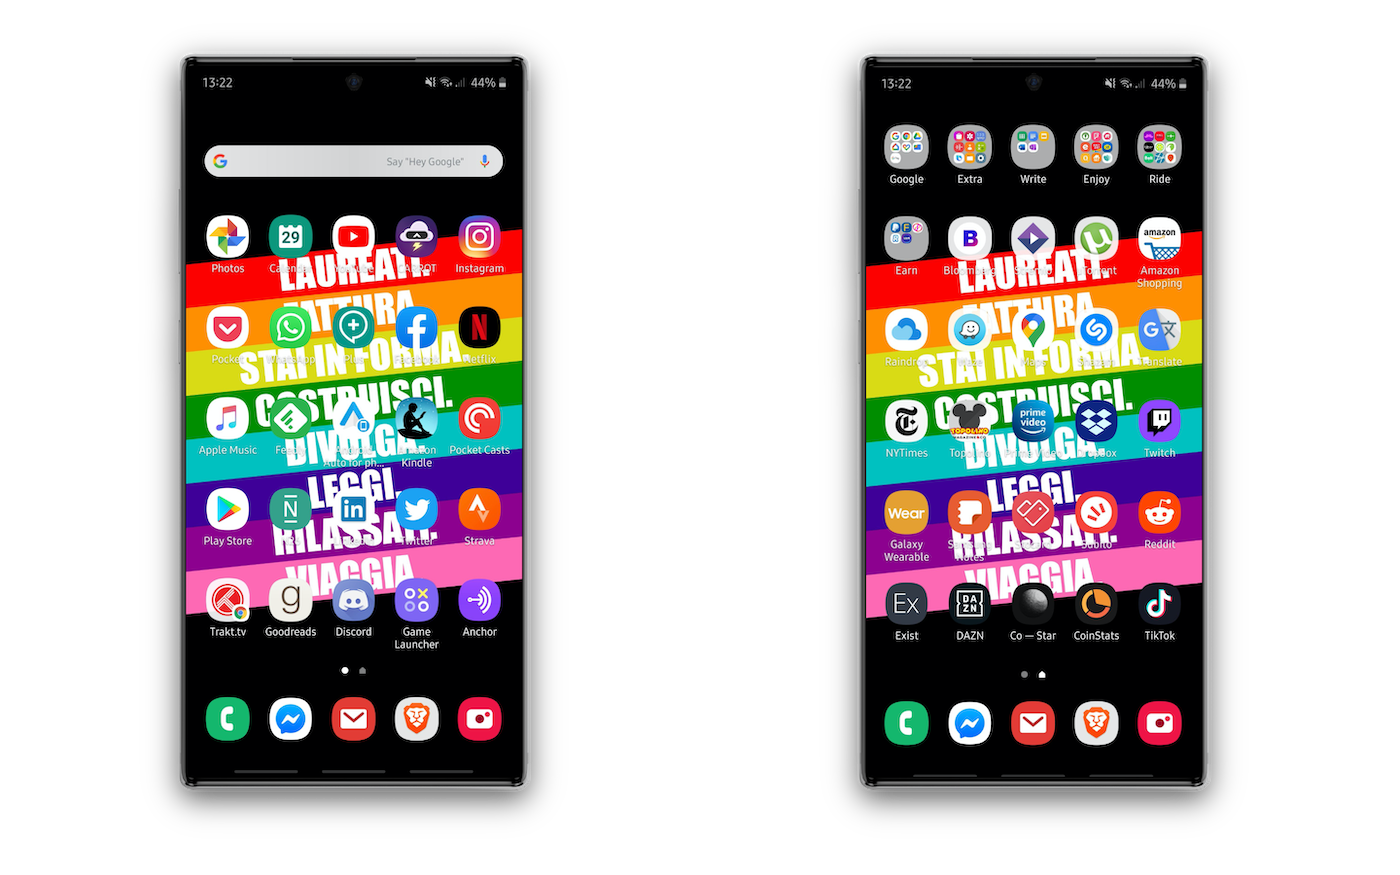 Homescreen Samsung Galaxy Note 10+, 2020